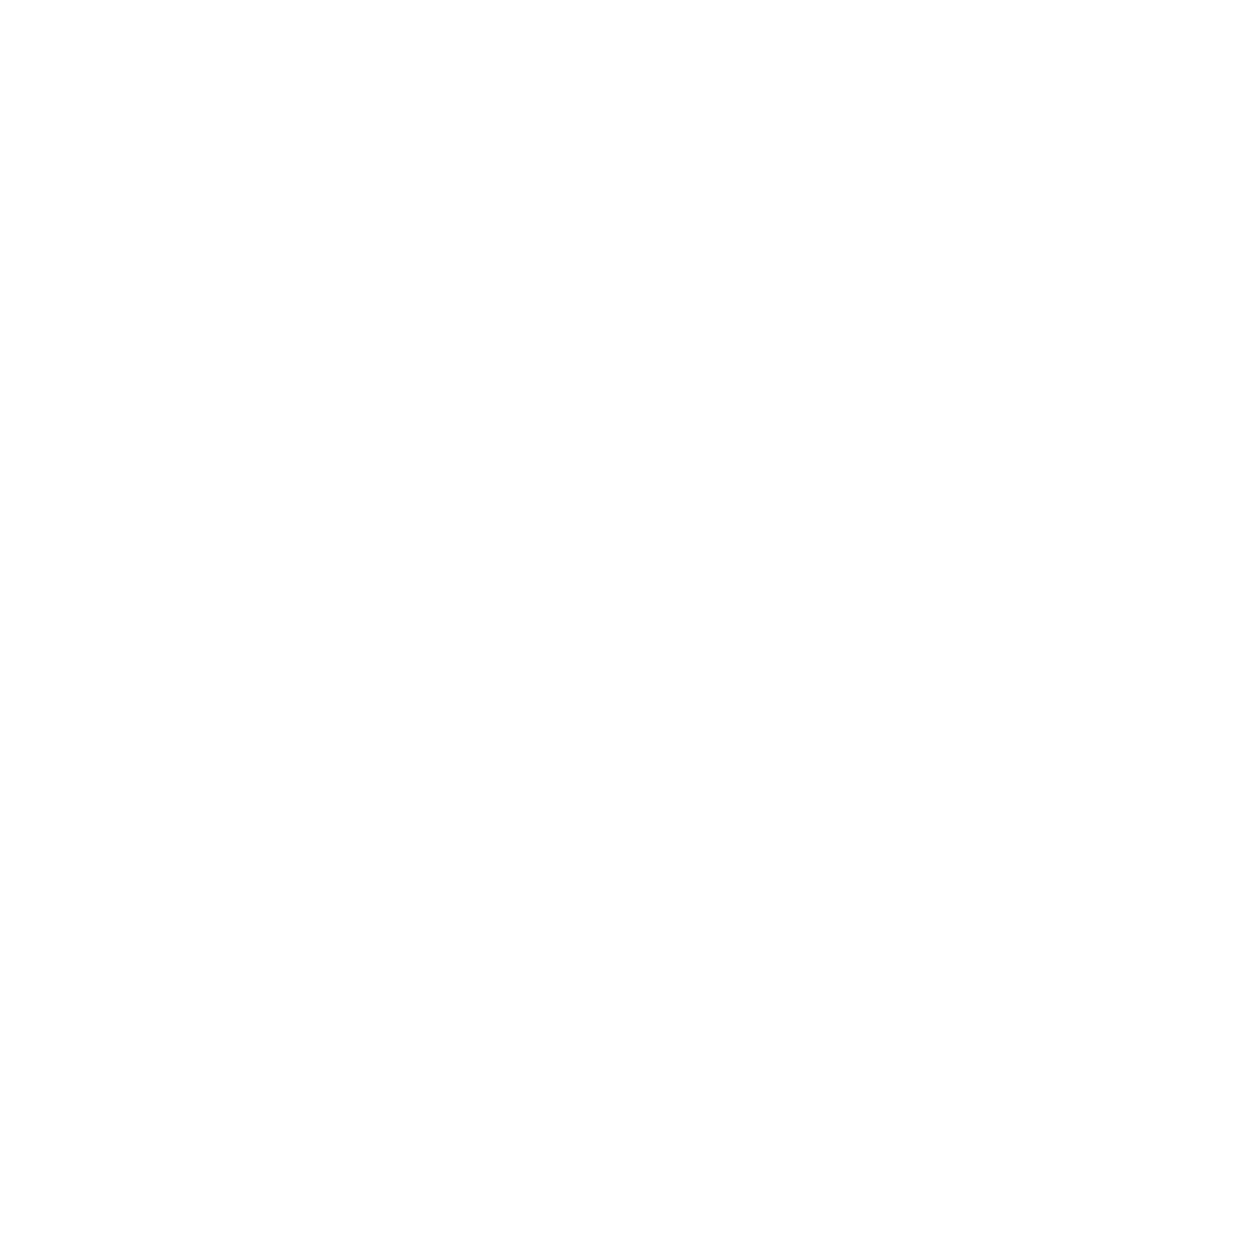 The Landis Taichung